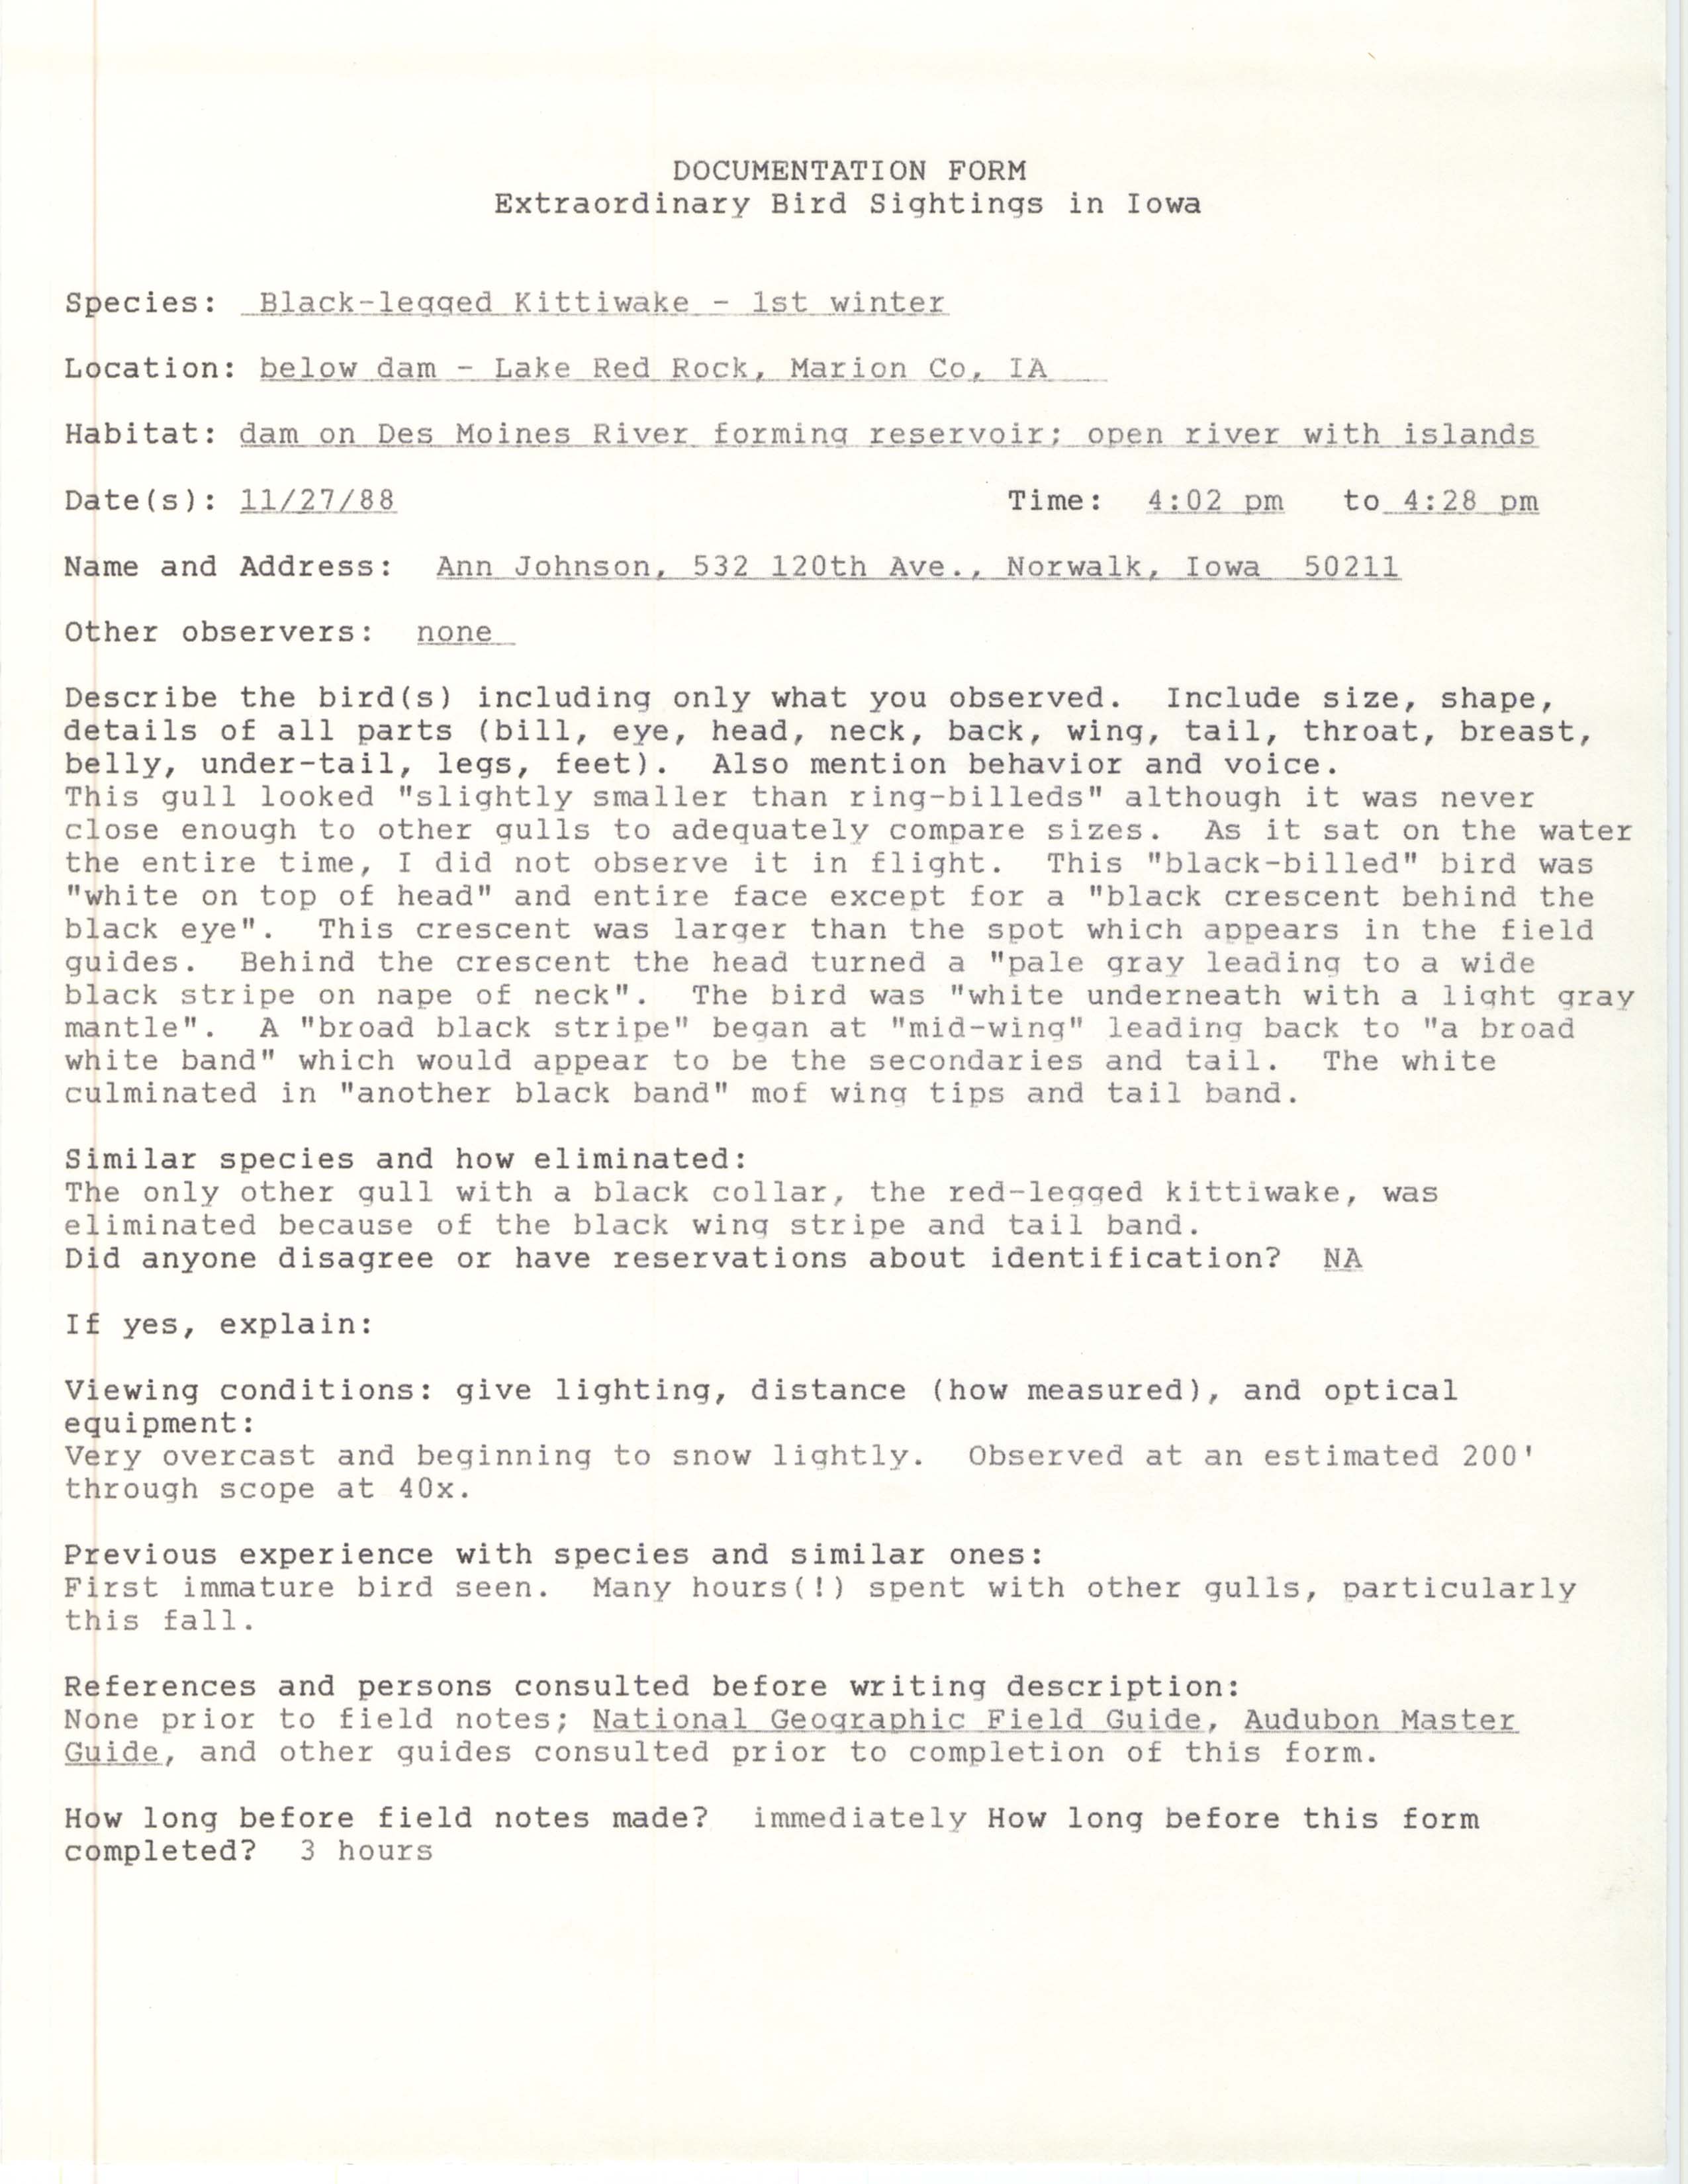 Rare bird documentation form for Black-legged Kittiwake at Lake Red Rock, 1988